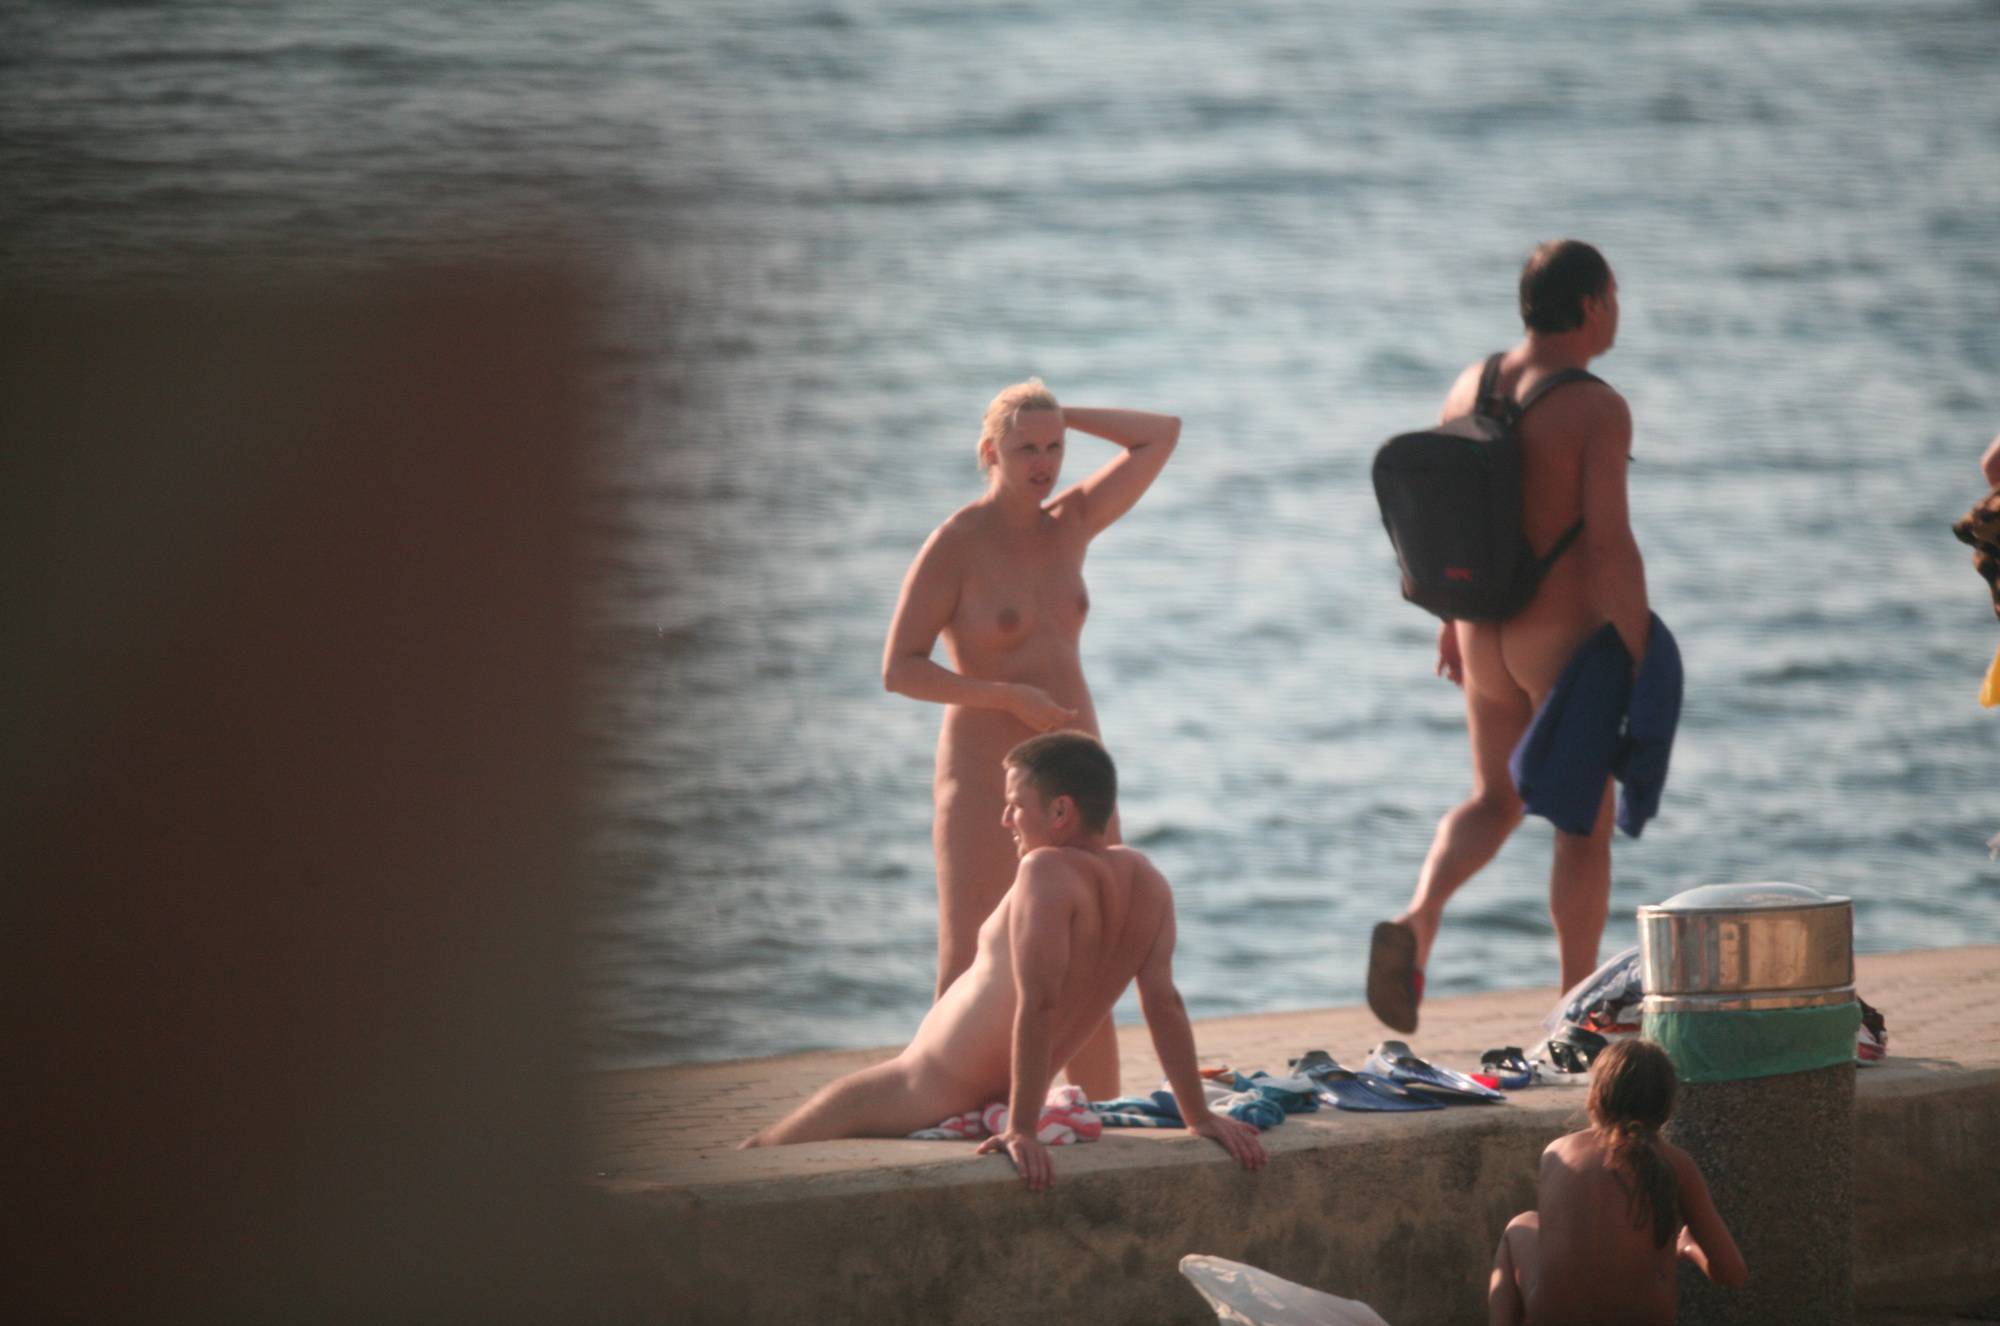 Bares Naturist Beach Slab - Nudist Pictures - 2